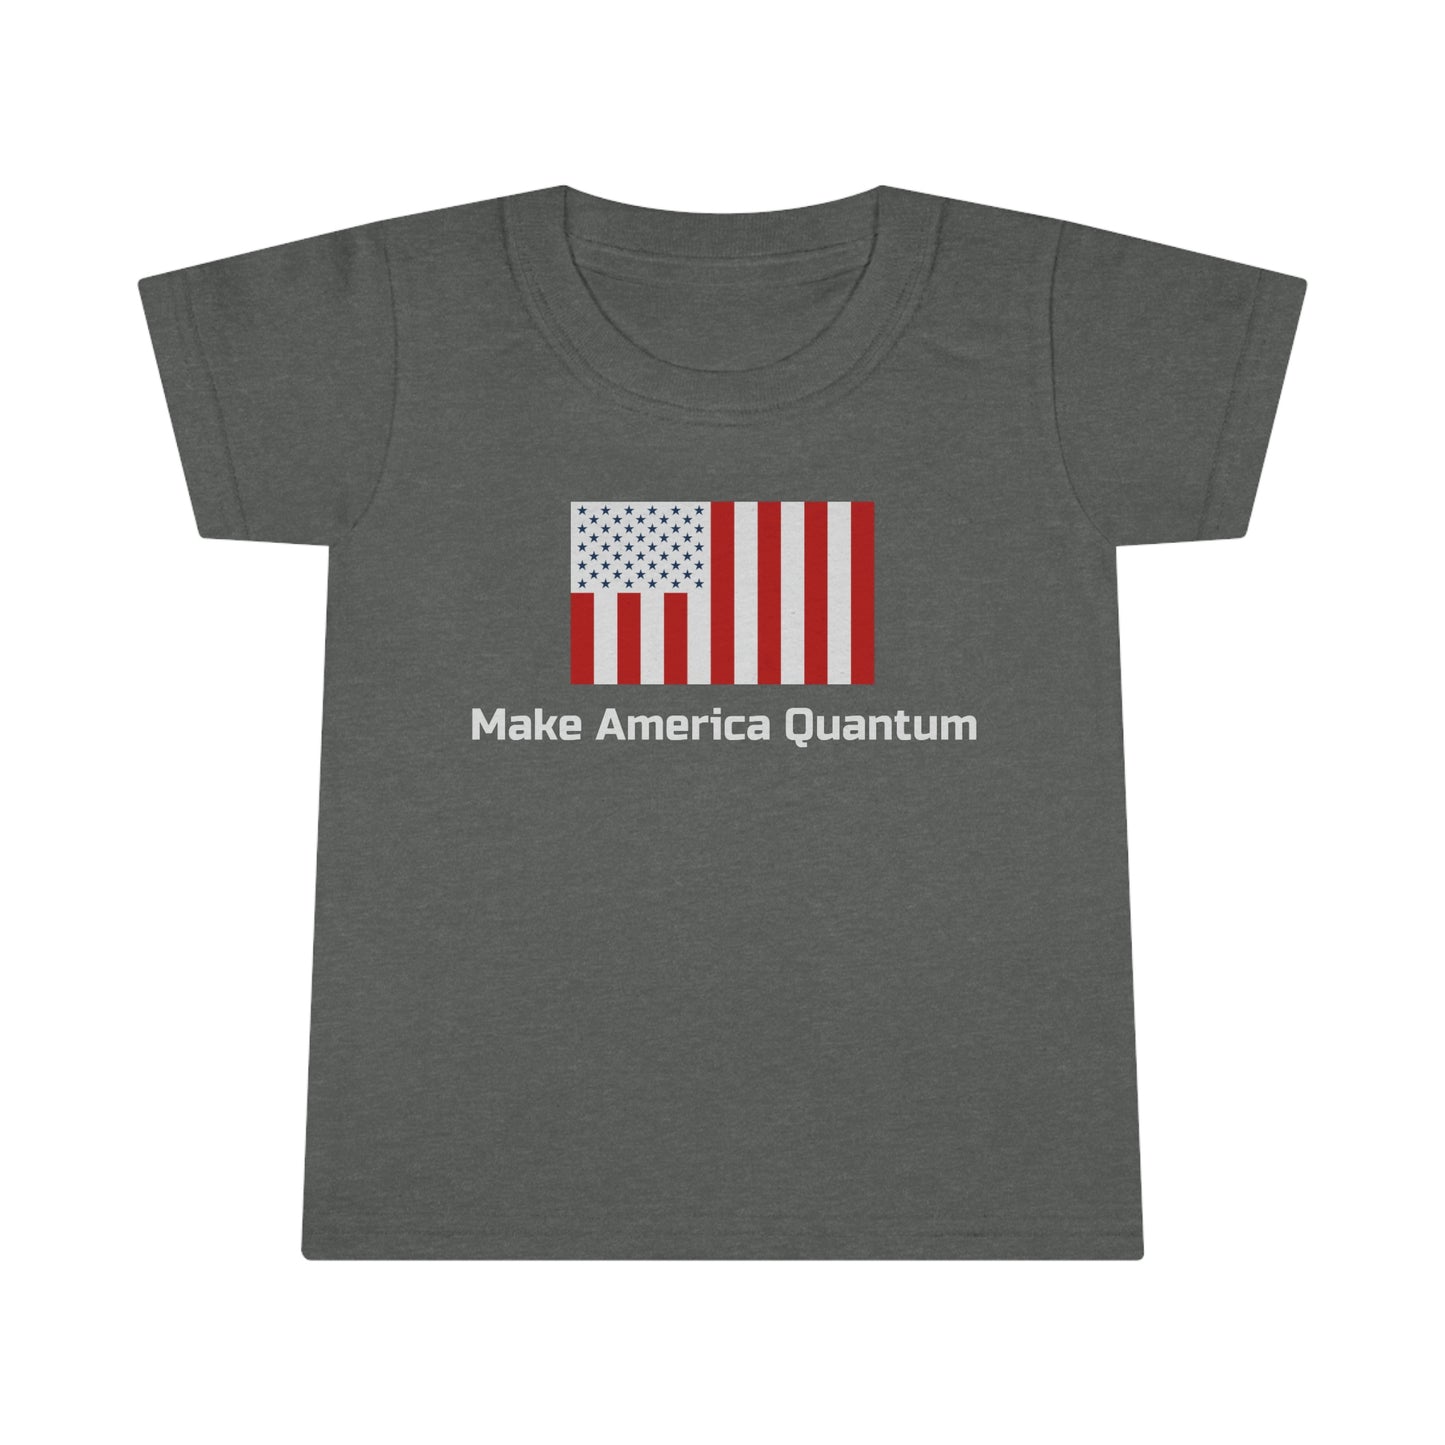 MAQ Toddler T-shirt